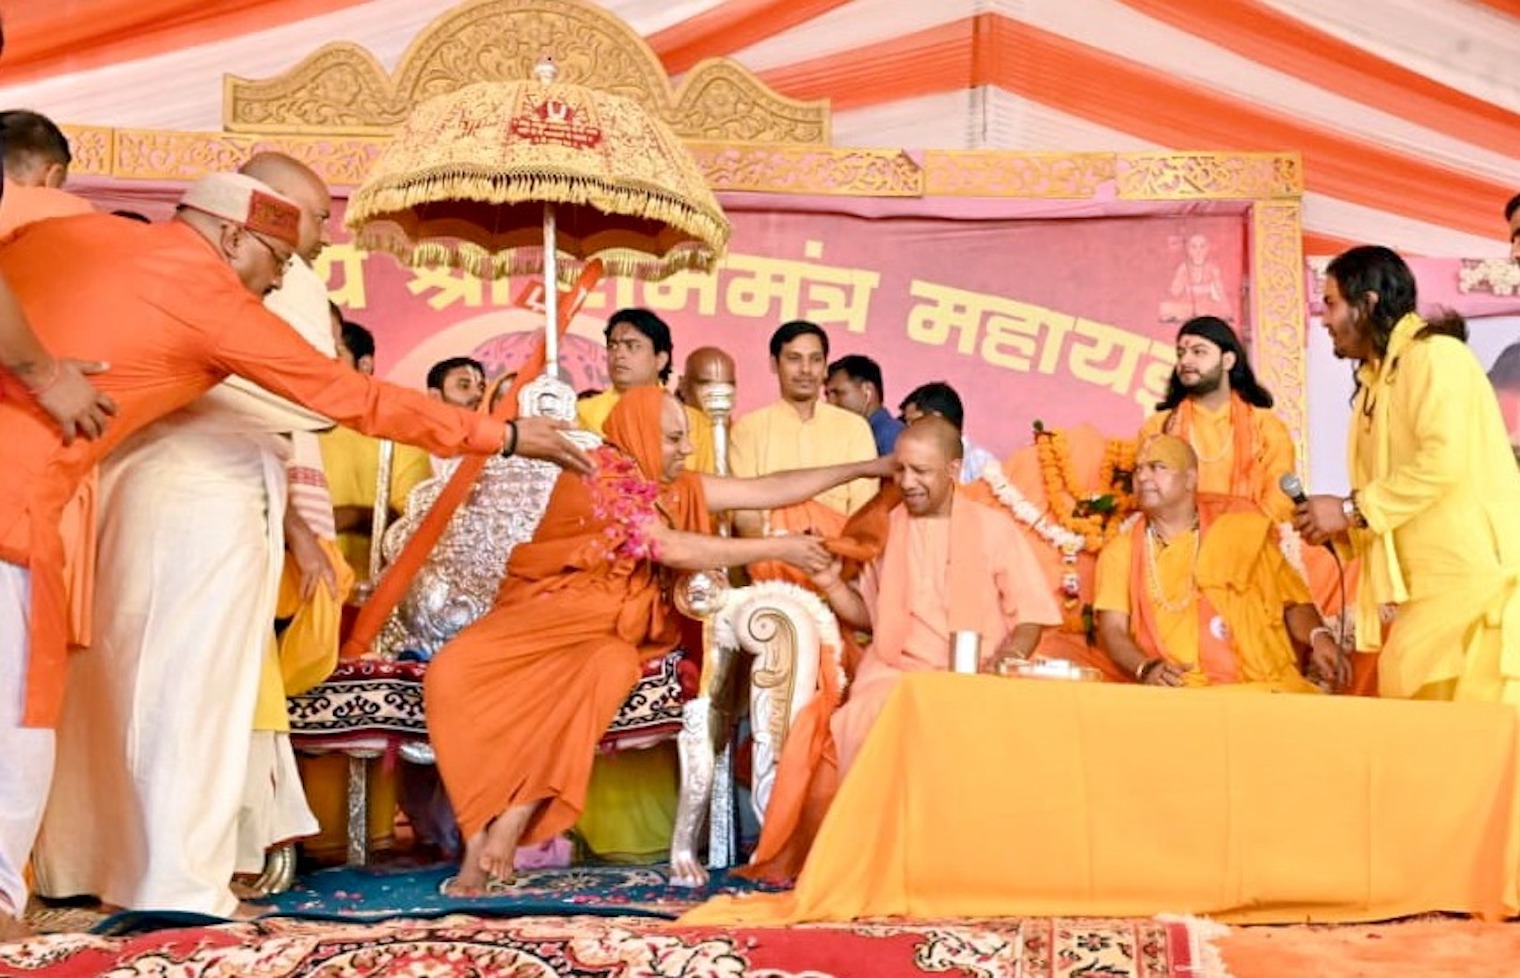 Chief Minister said in Shri Ram Mantra Mahayagya Silver Jubilee Festival